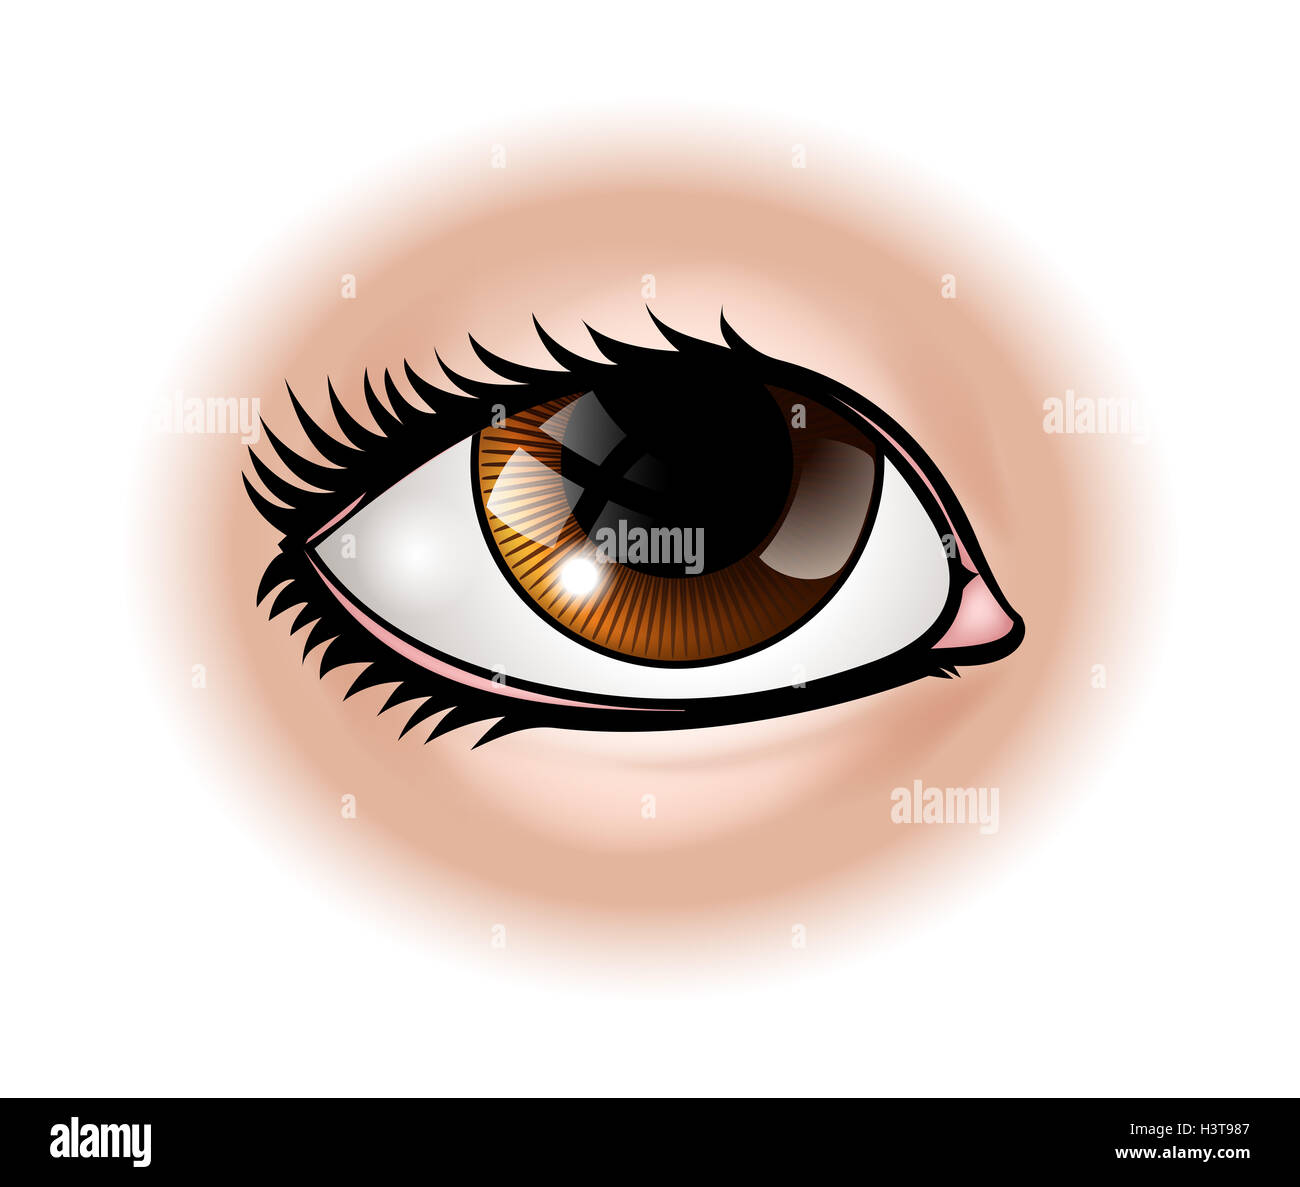 An illustration of a human eye body part Stock Photo